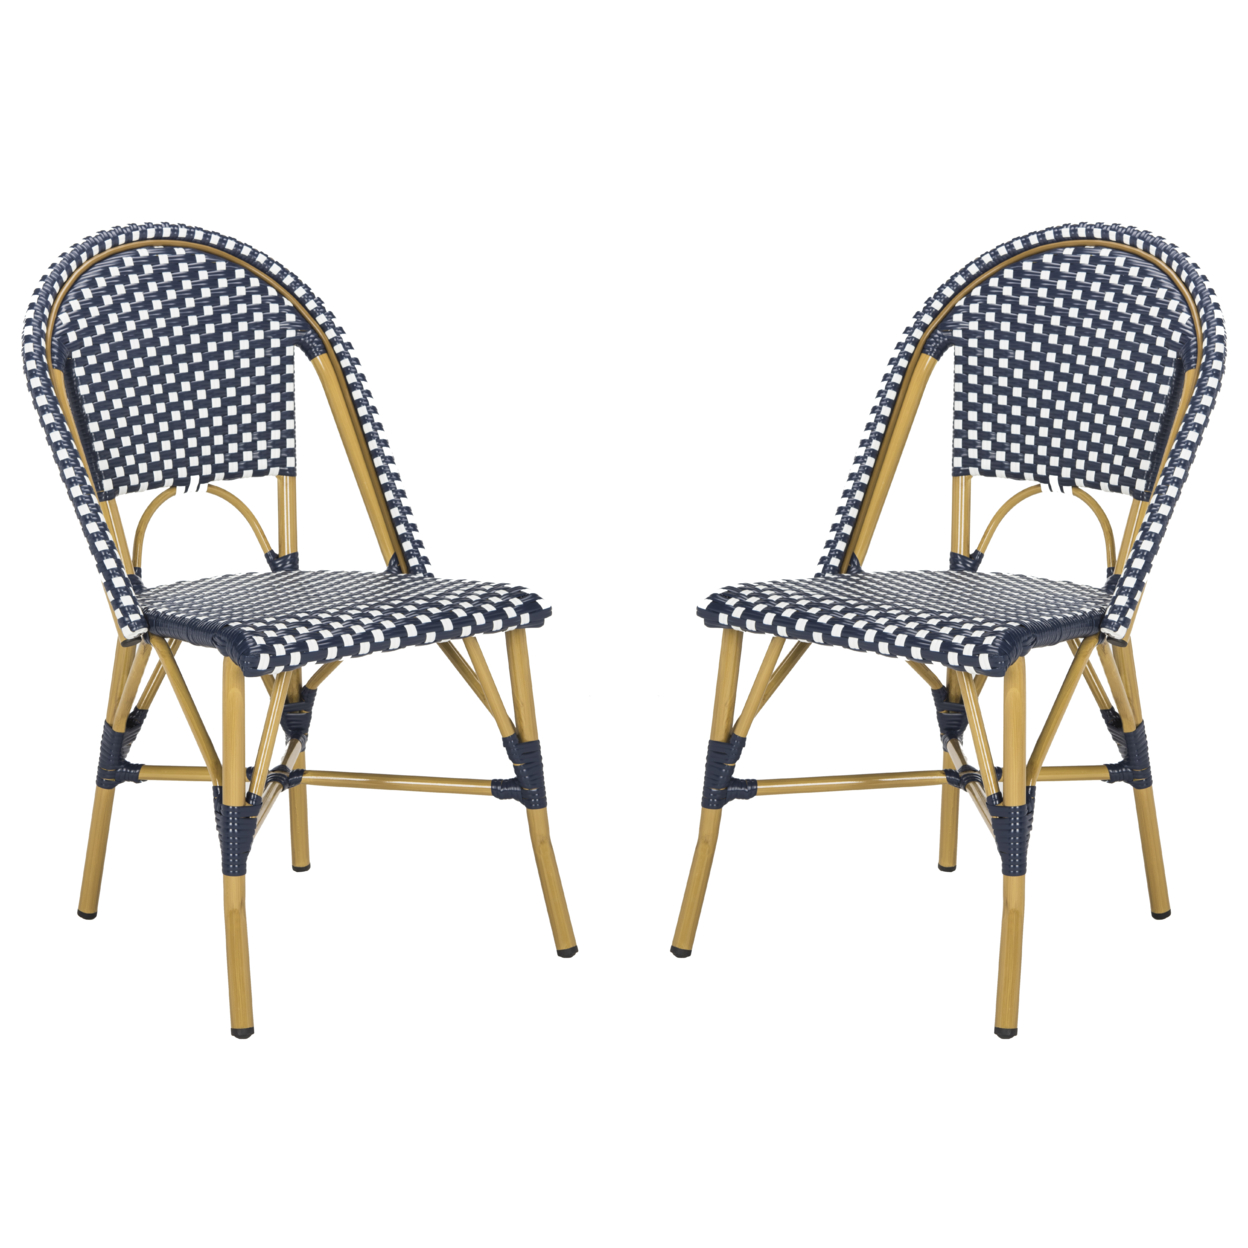 SAFAVIEH Outdoor Collection Salcha Bistro Side Chair Navy/White/Light Brown